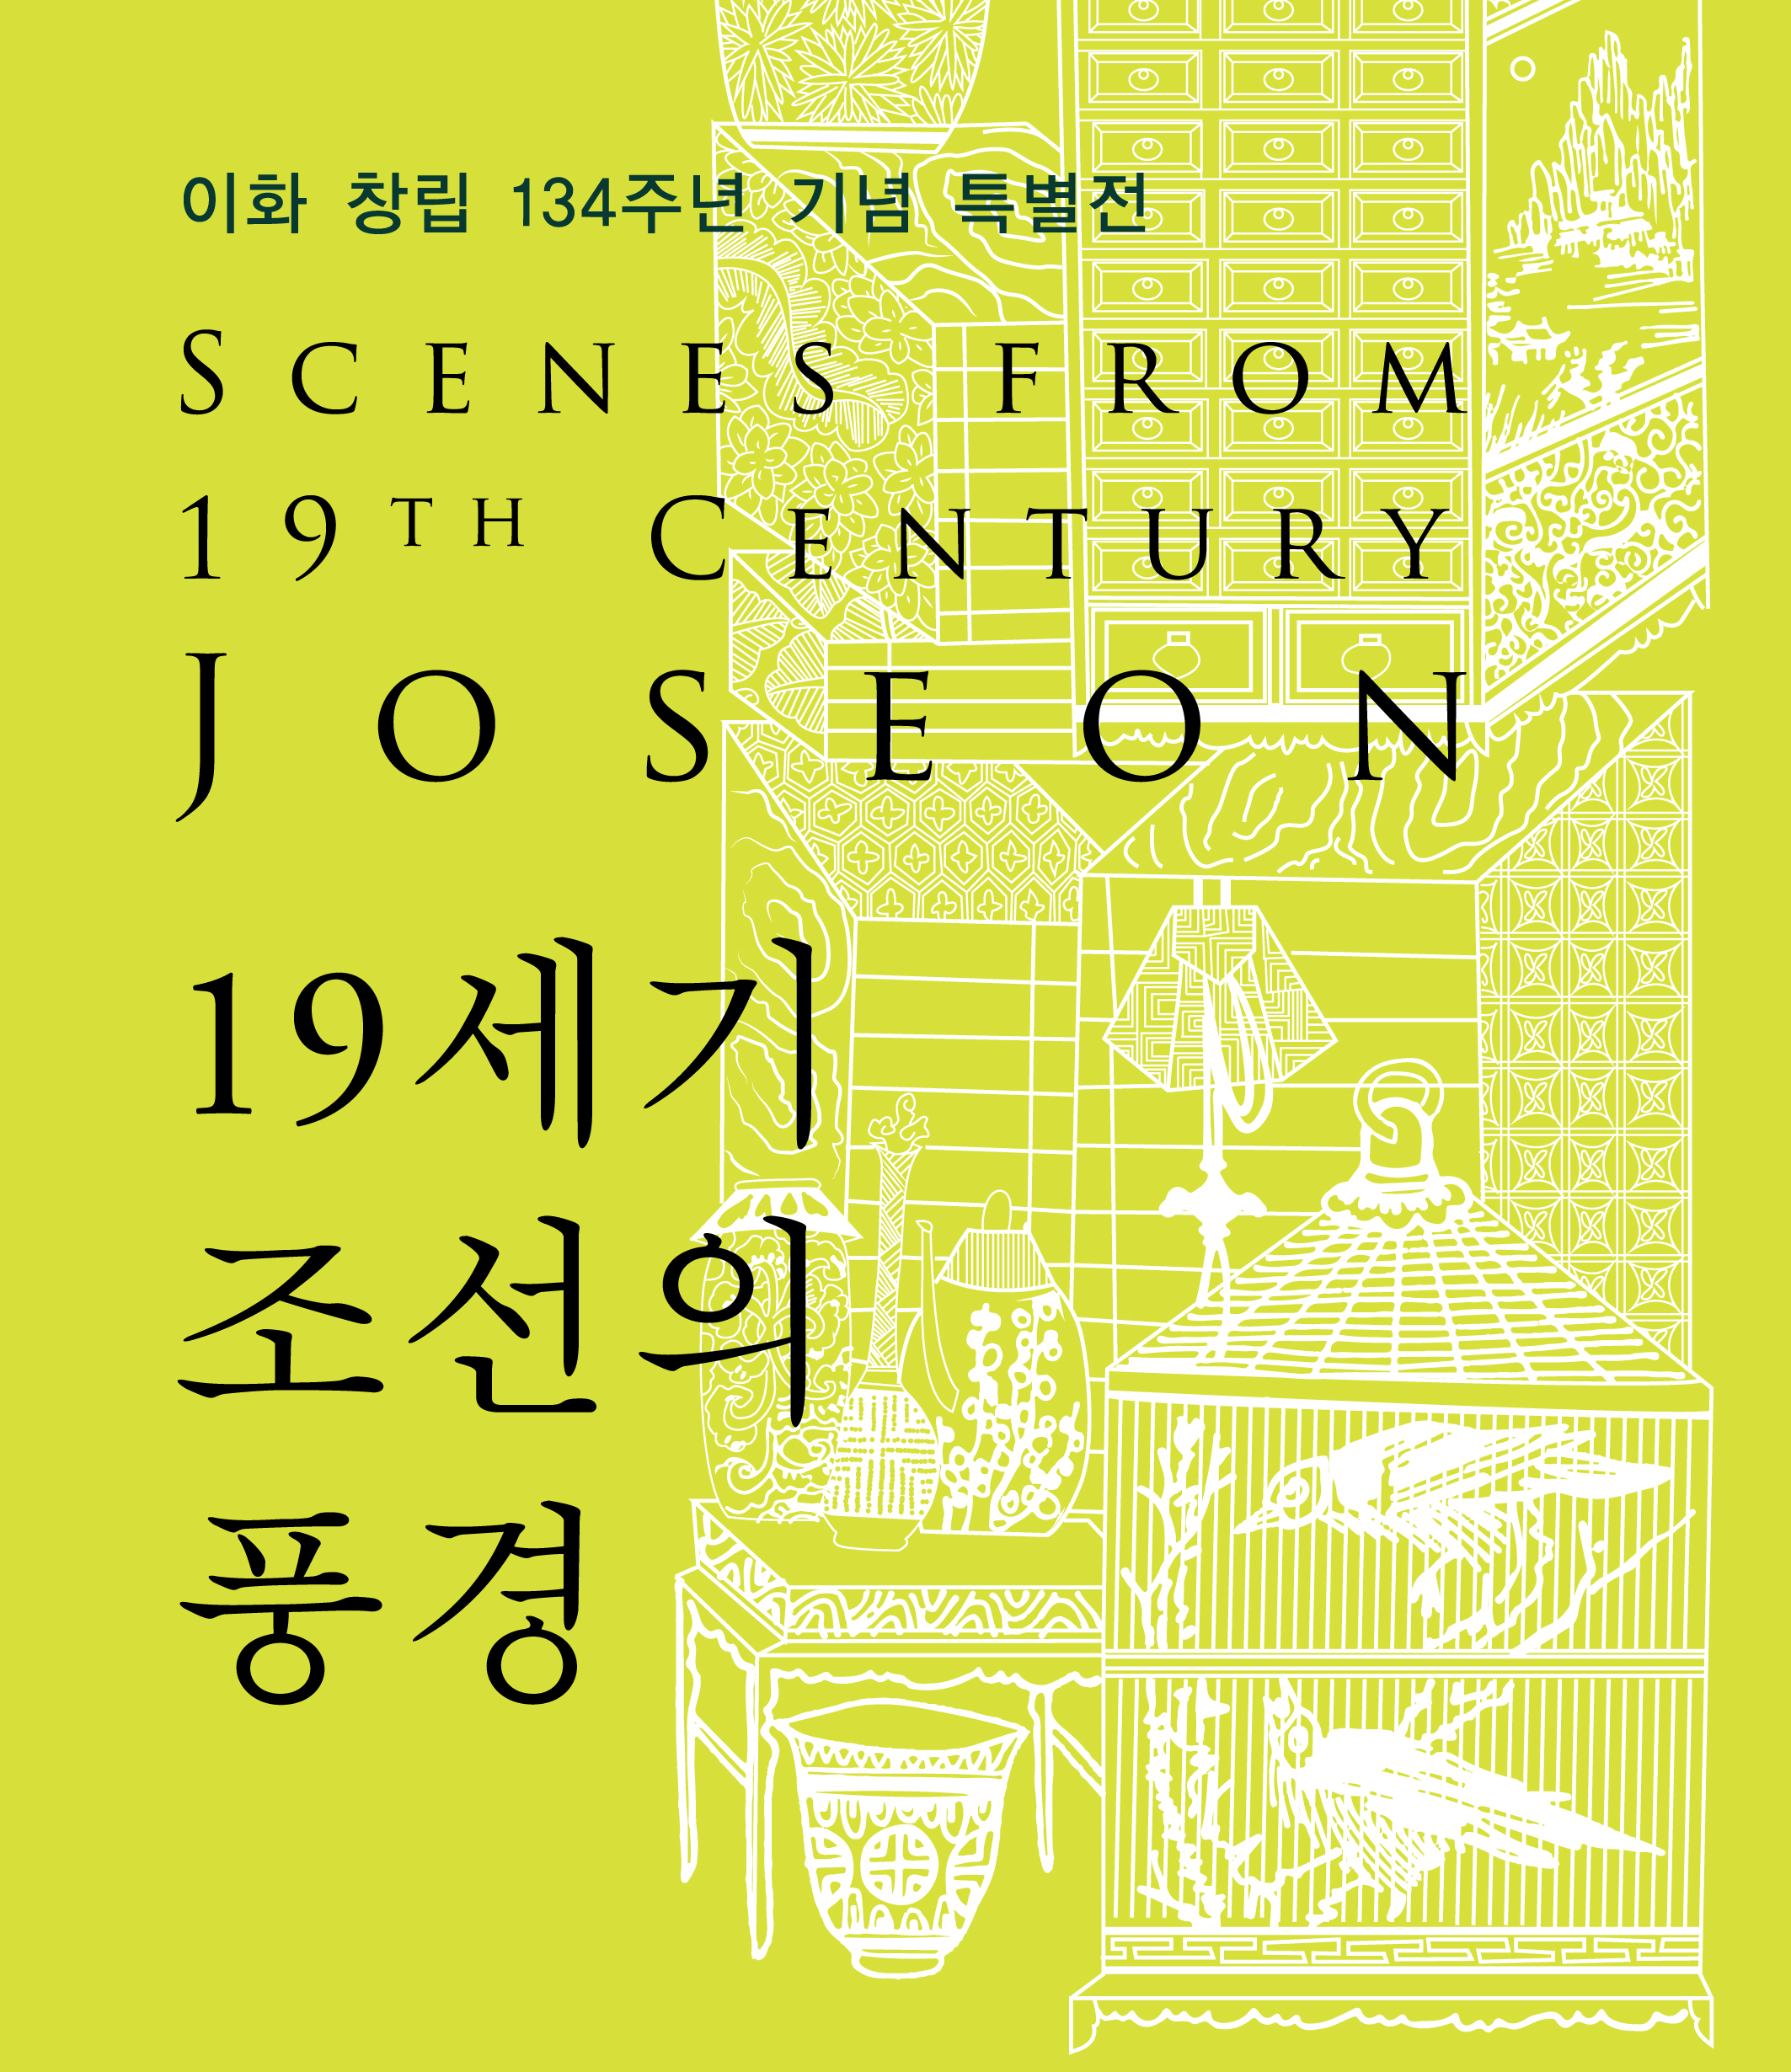 Scenes From 19th Century Joseon